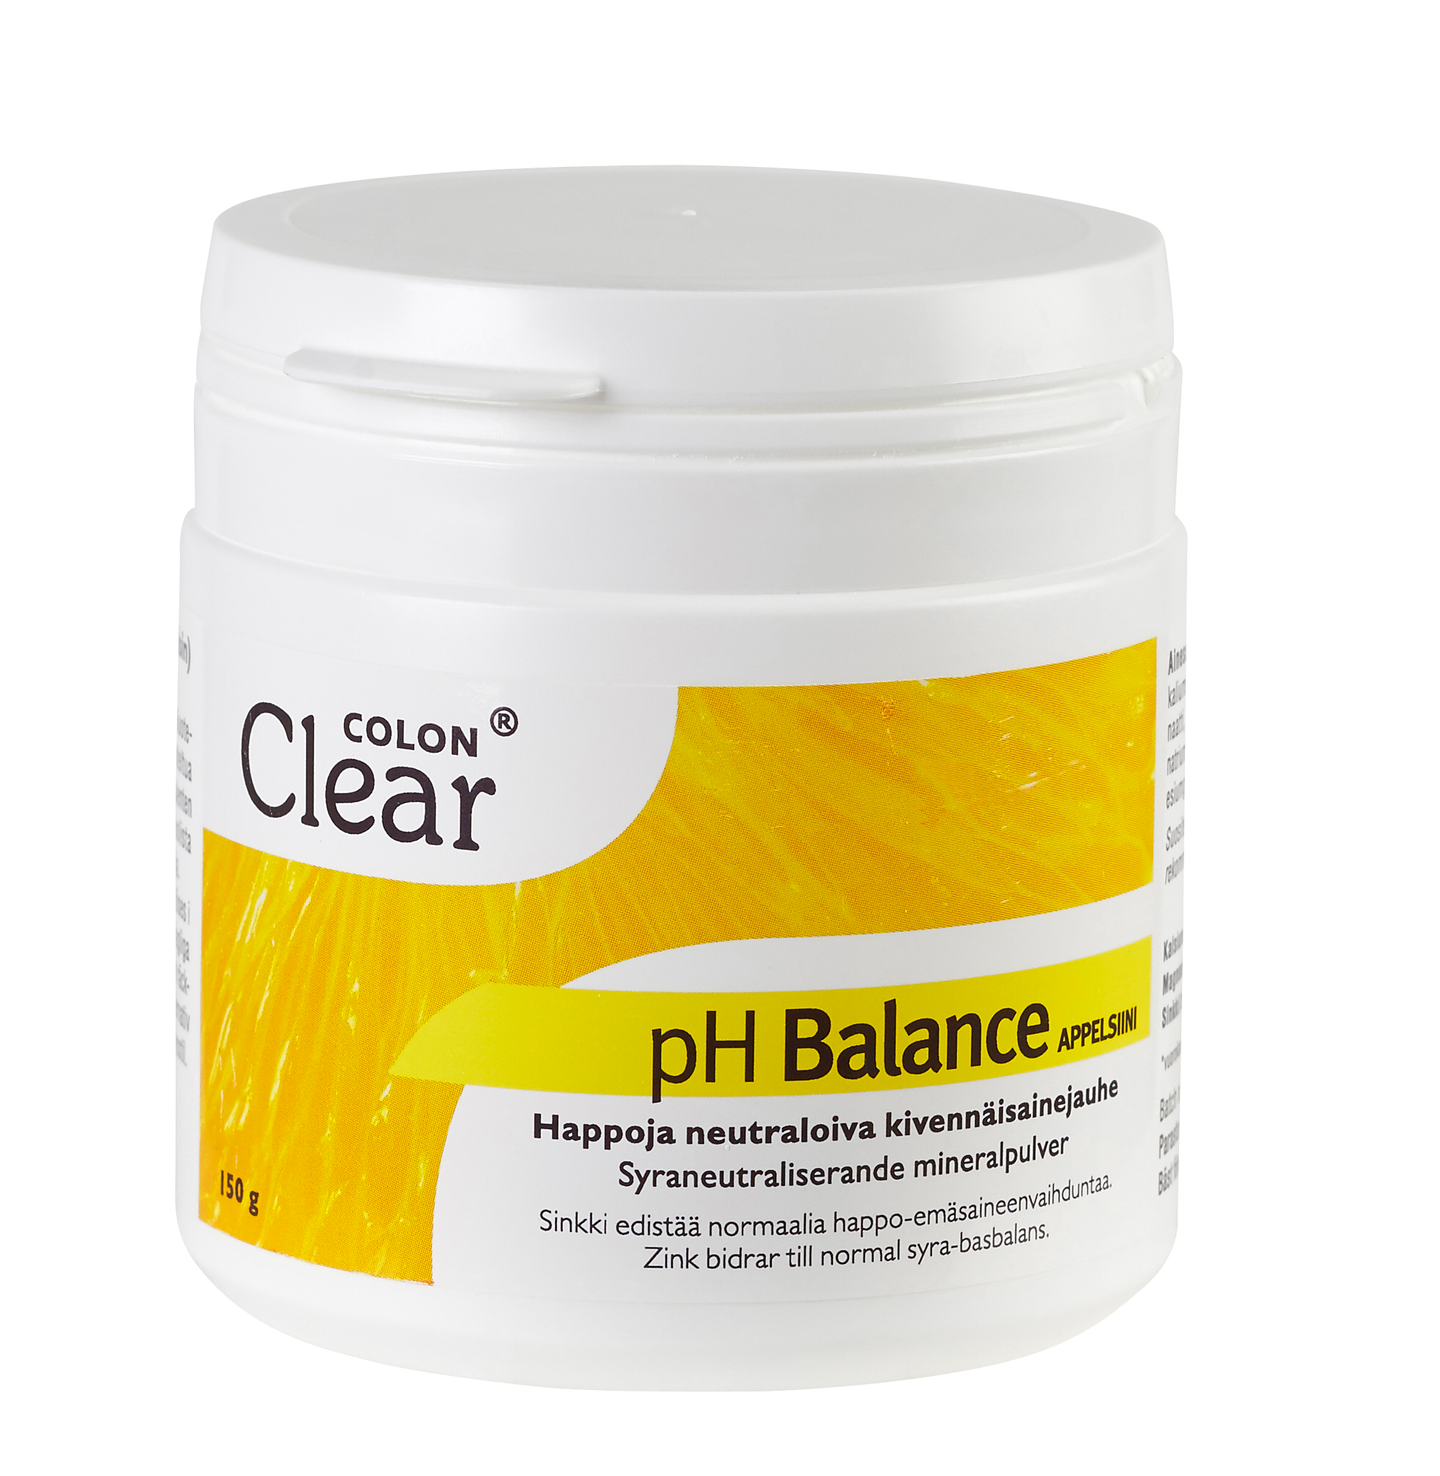 Colon Clear ph Balance 150g appelsiini